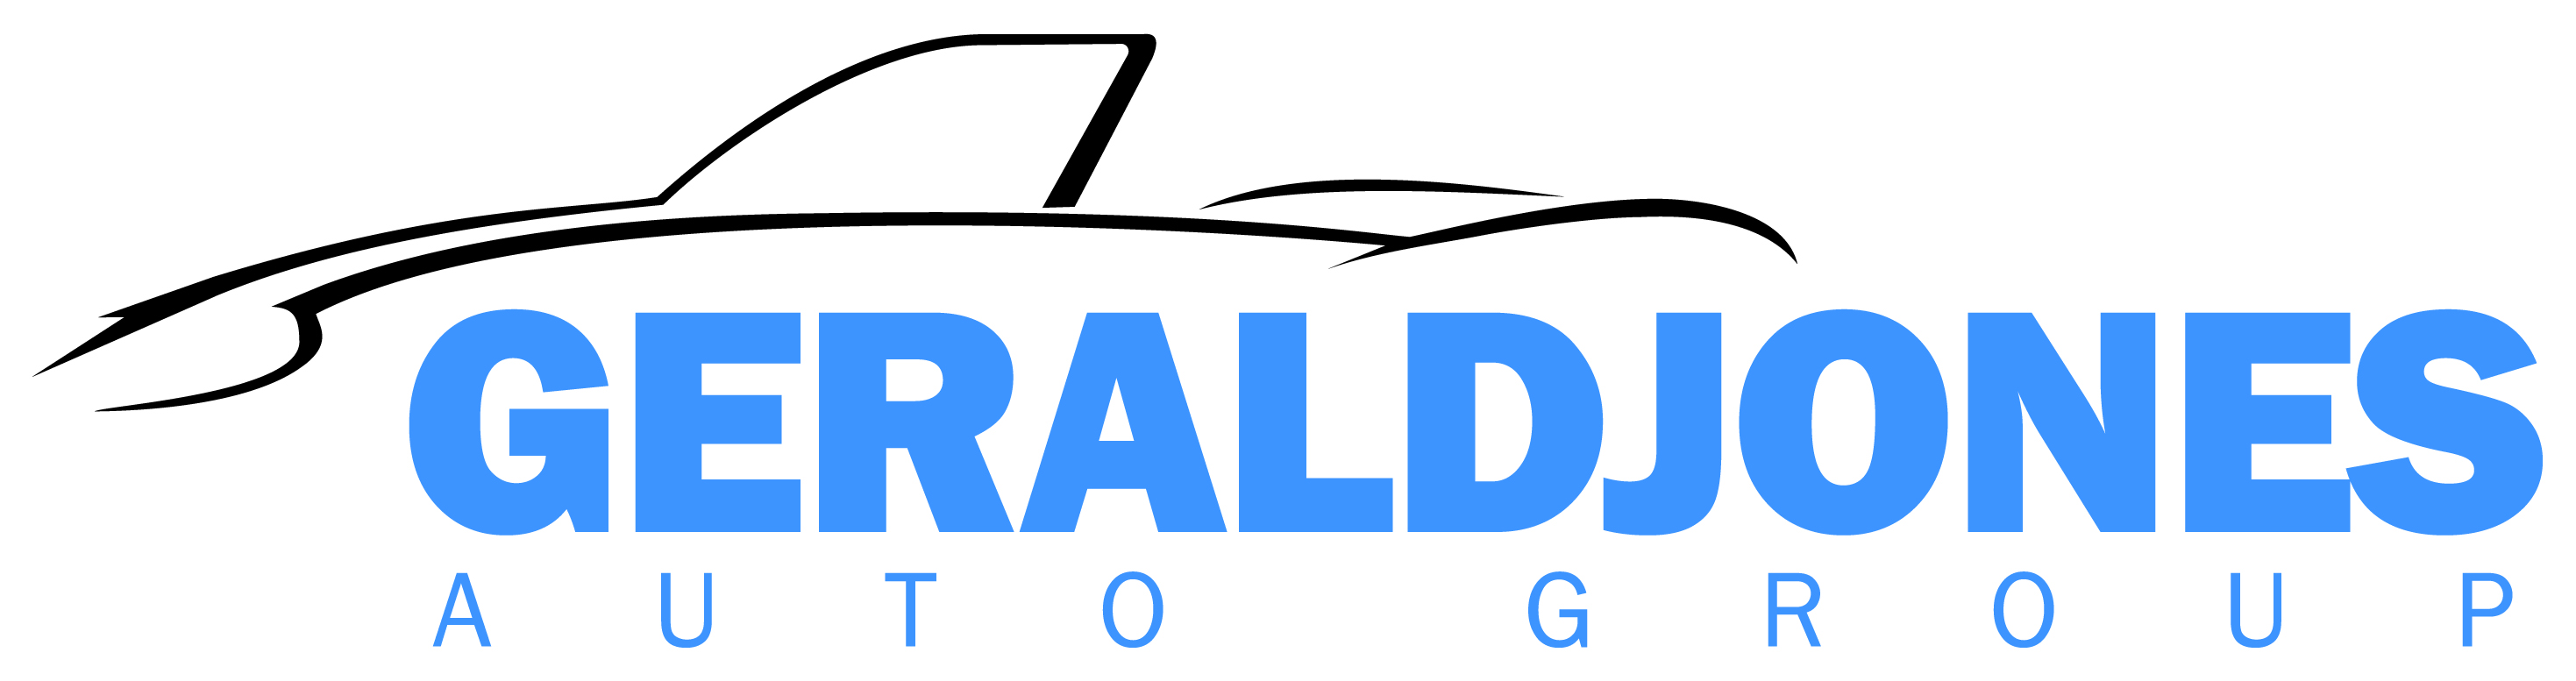 Gerald Jones Auto Group Logo